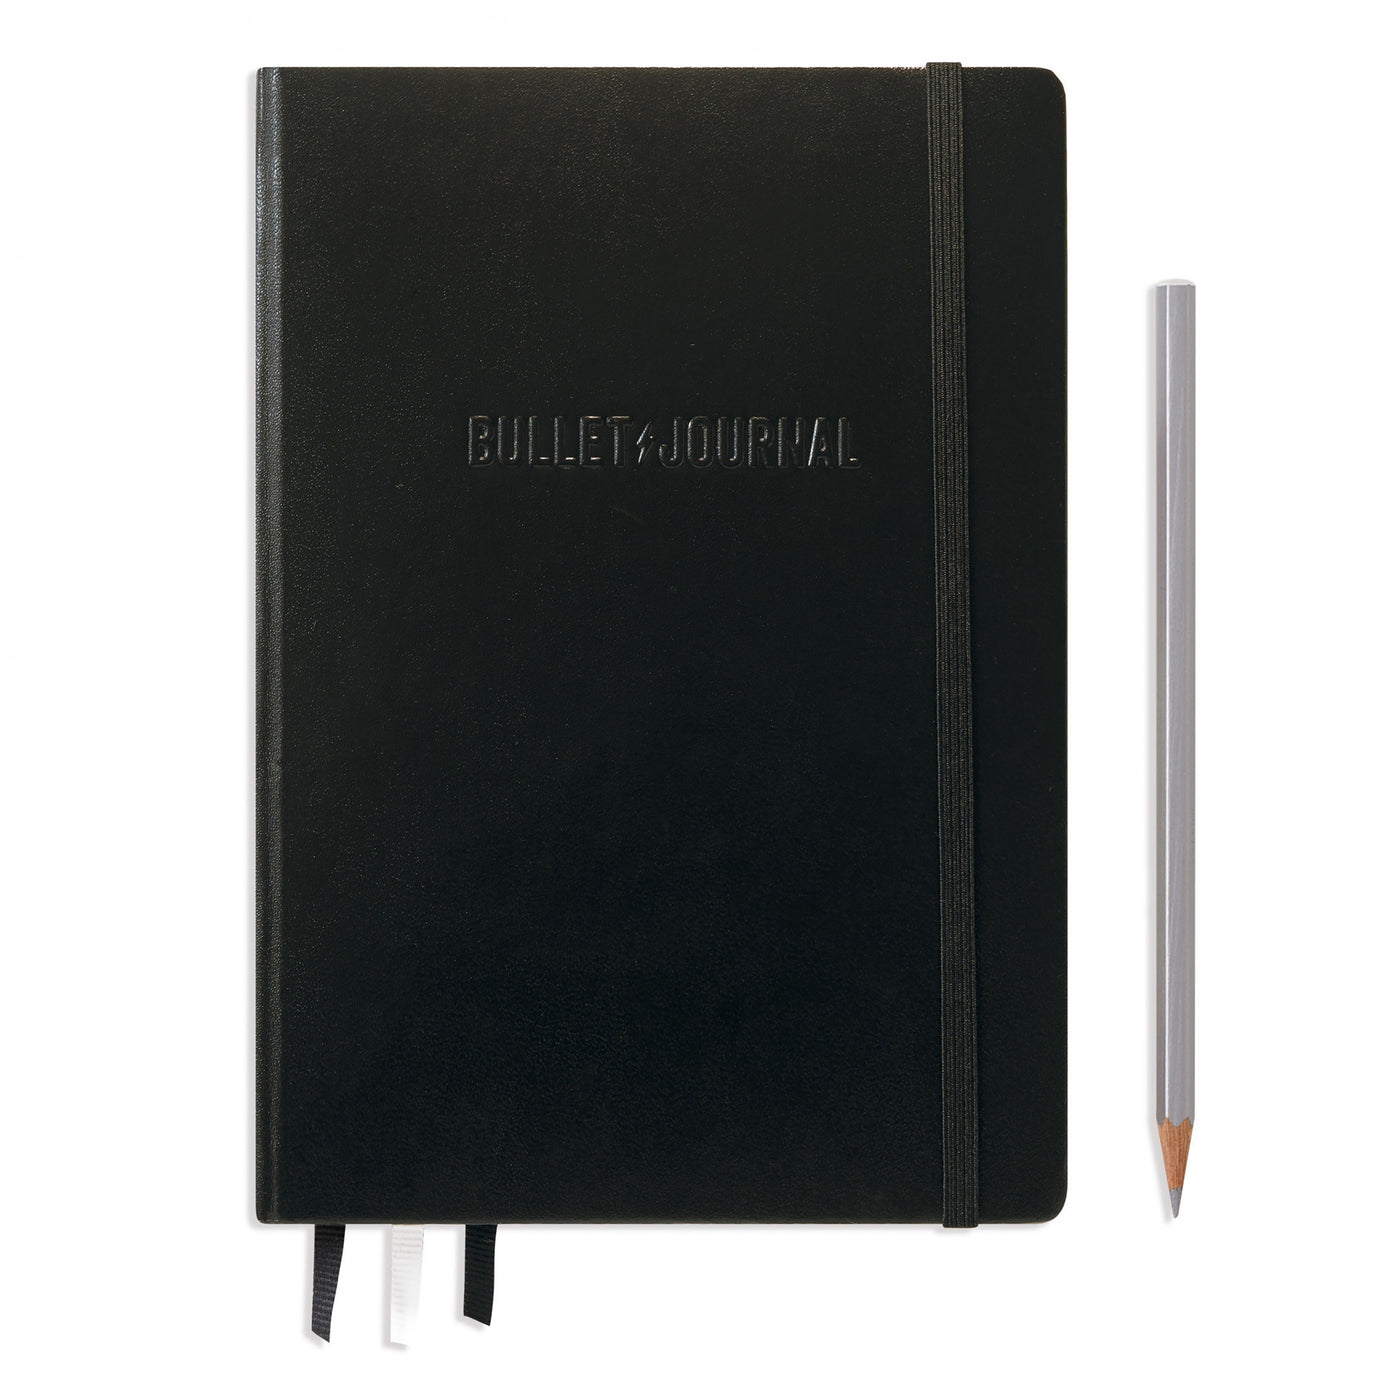 Bullet Journal Edition 2 - Medium (A5)